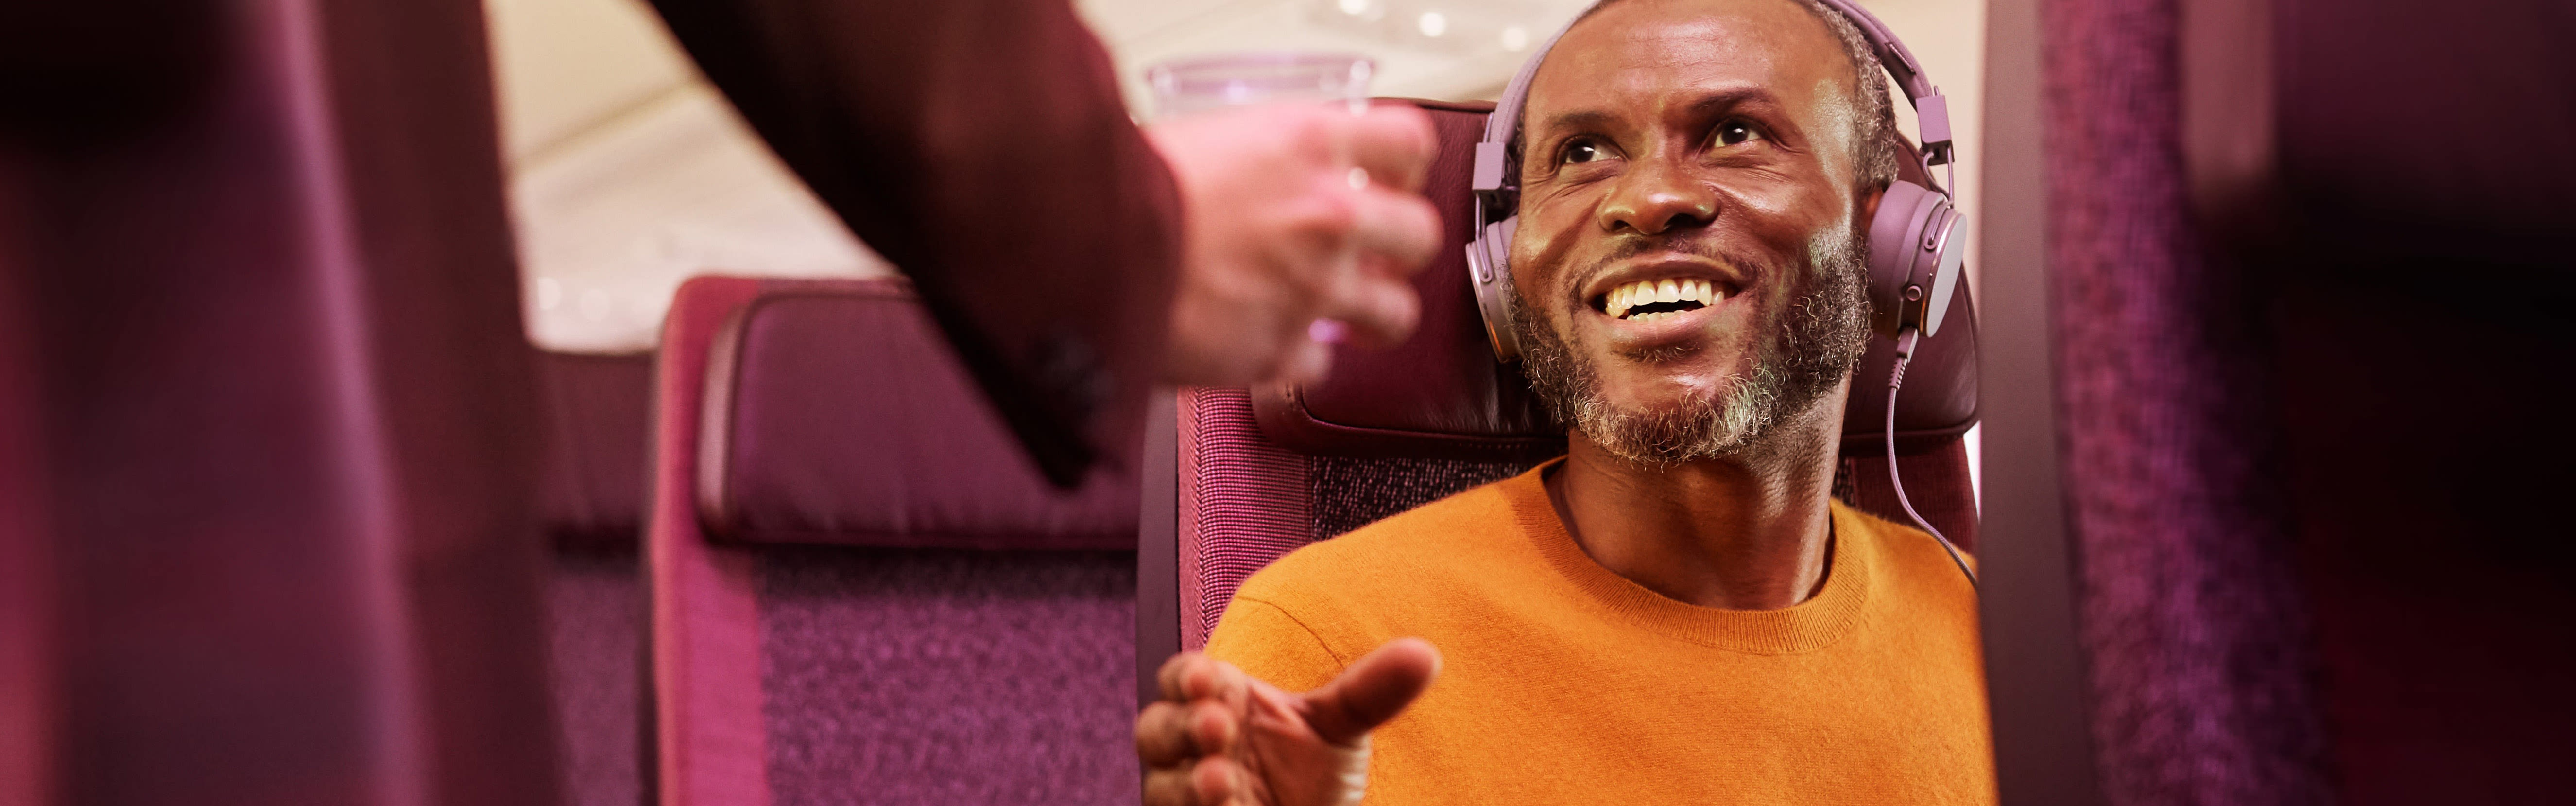 A man receiving a drink on a Virgin Atlantic flight